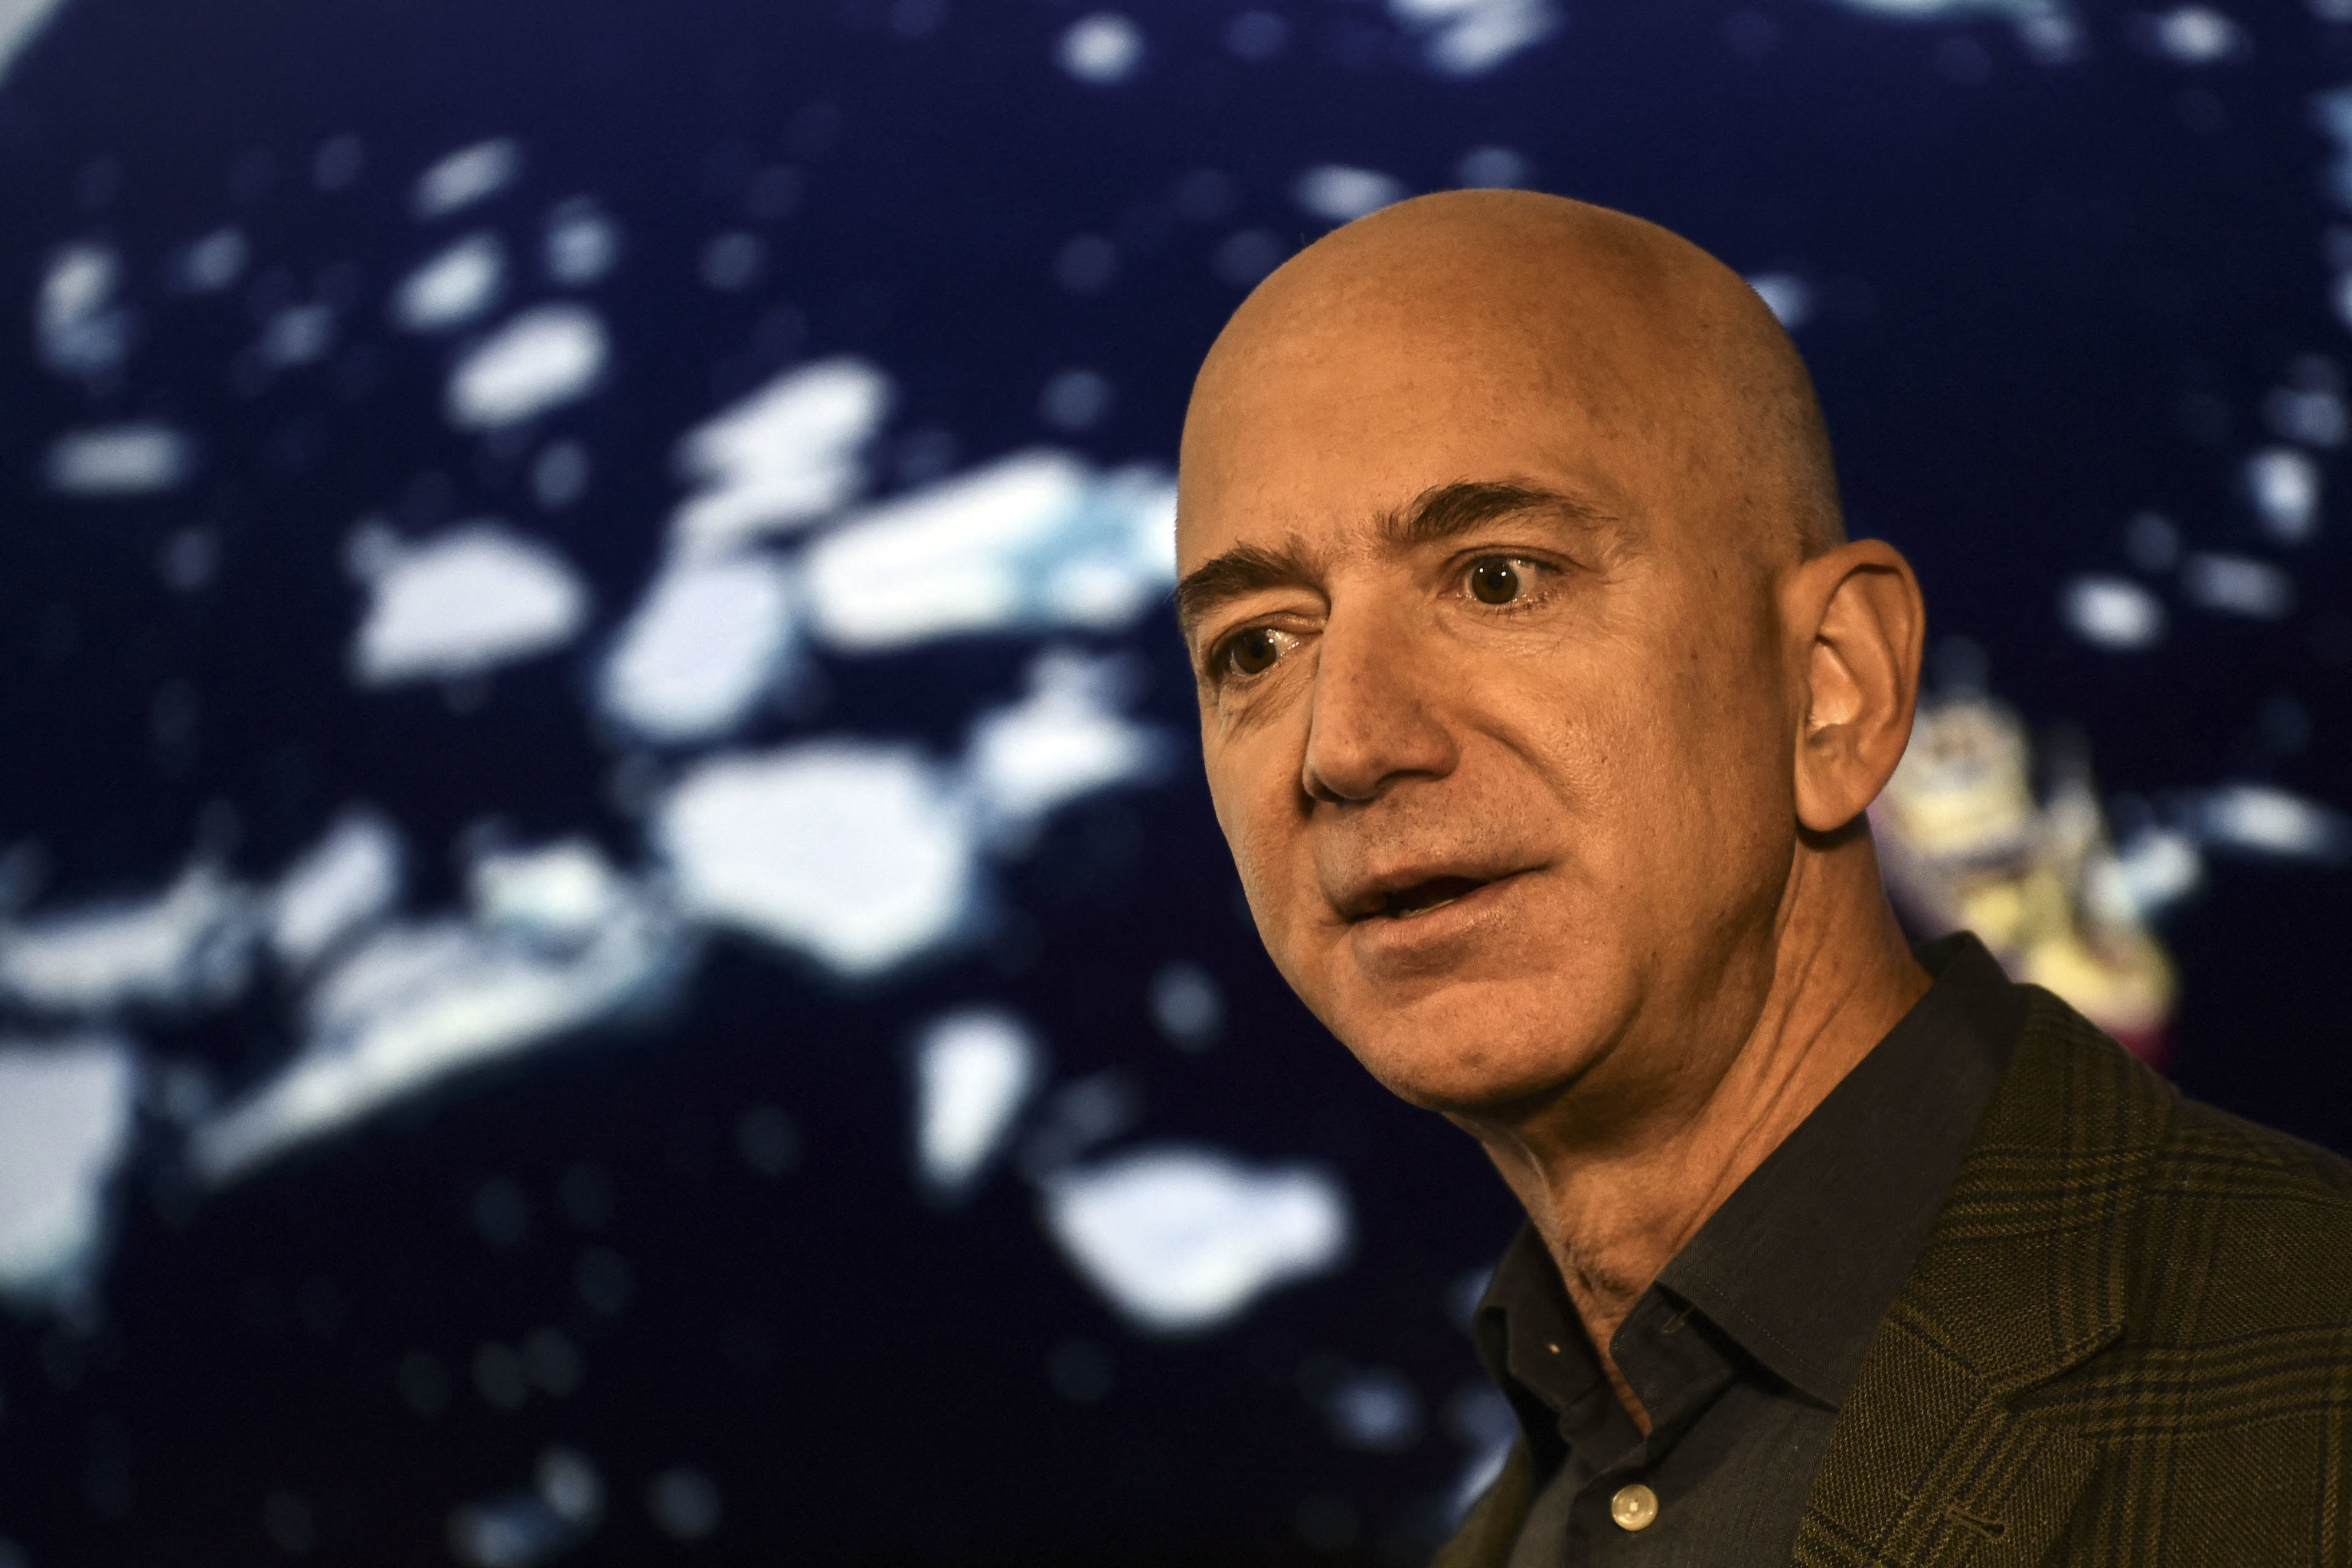 Jeff Bezos aconseja no comprarse televisores o coches ante una posible recesión